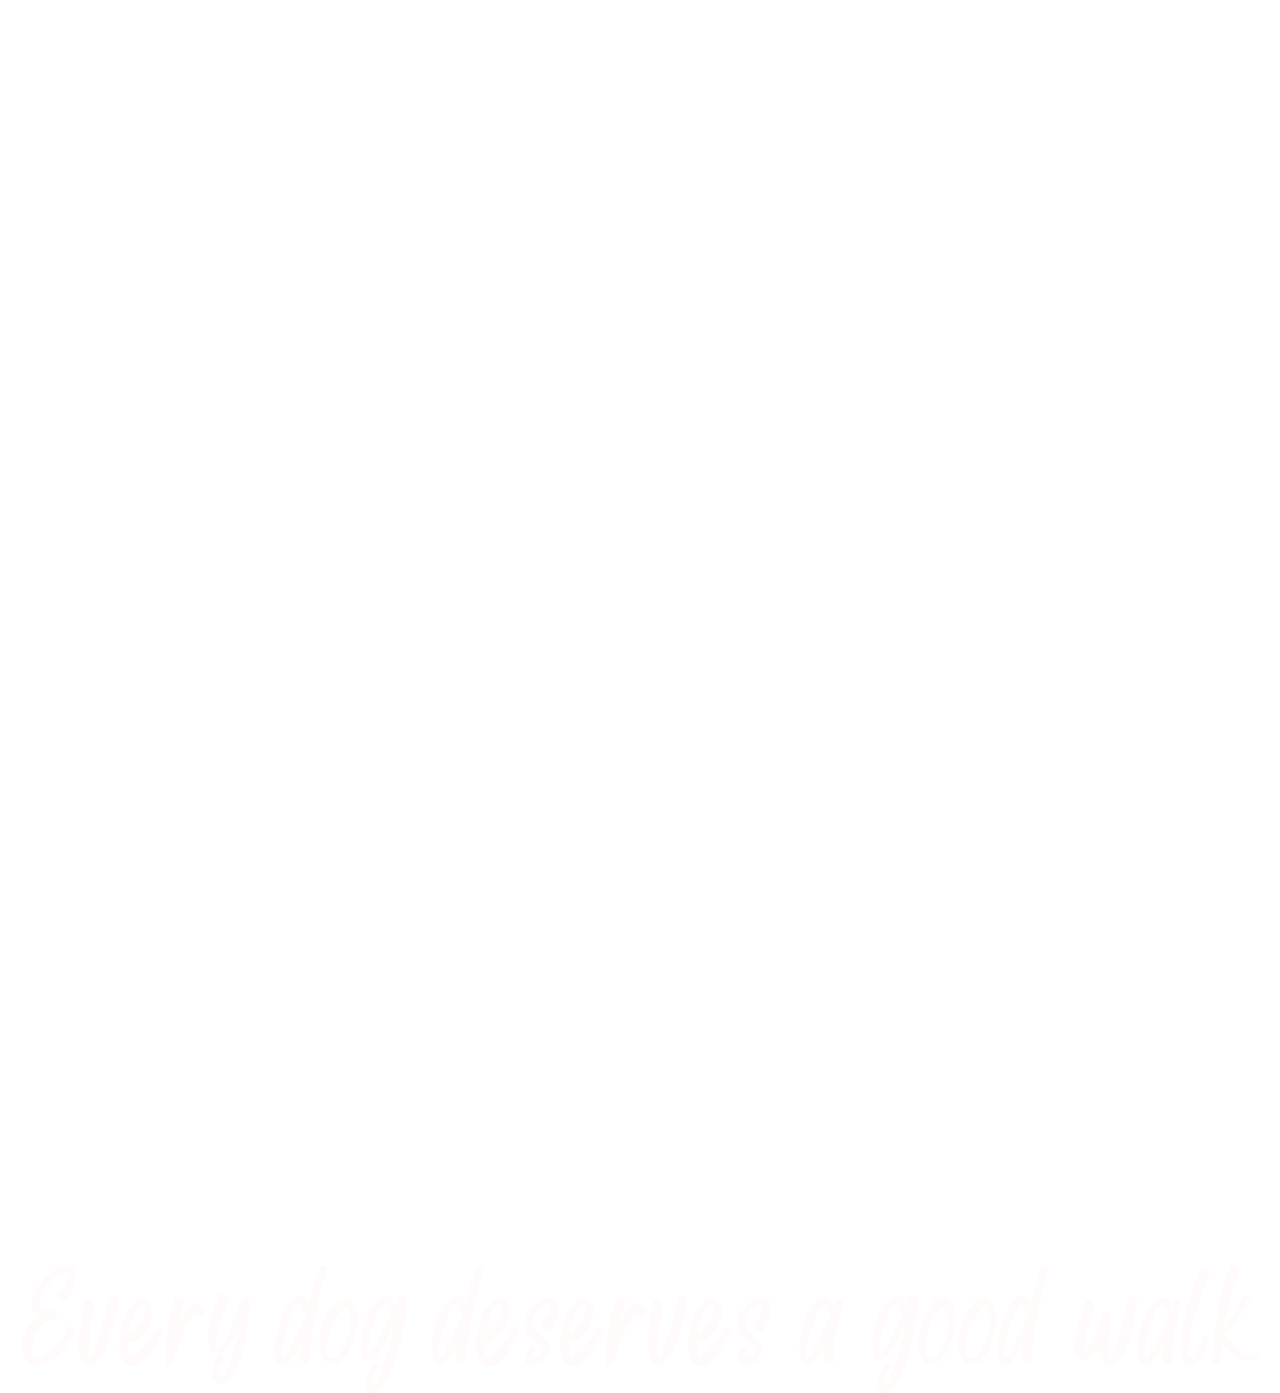 Furry Footsteps Leeds's logo